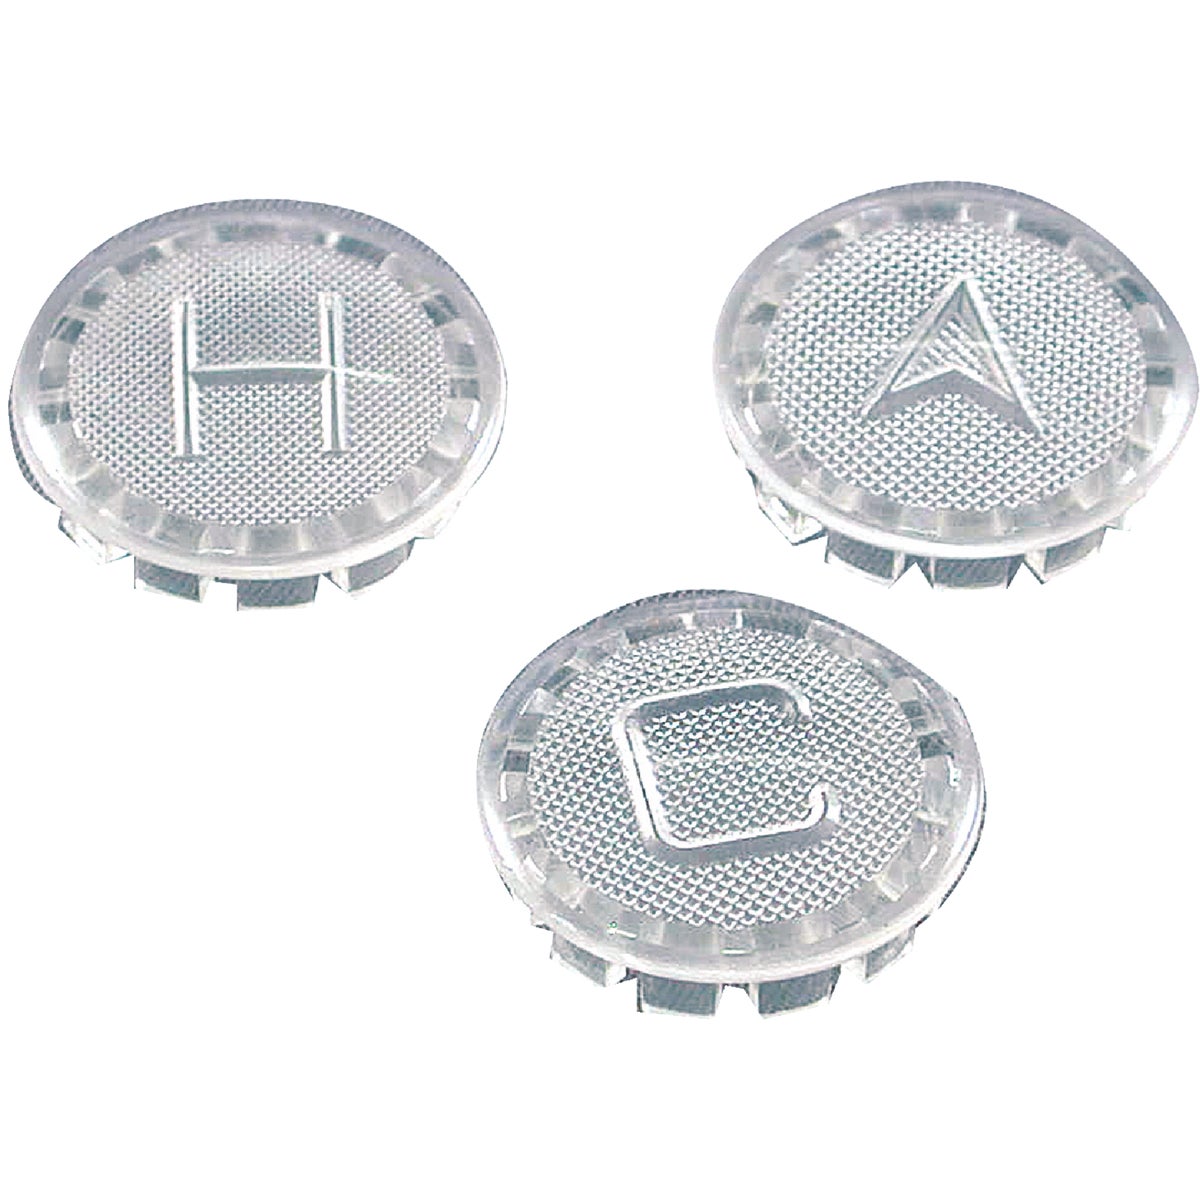 Danco Hot, Cold, Diverter Clear Acrylic Handle Button